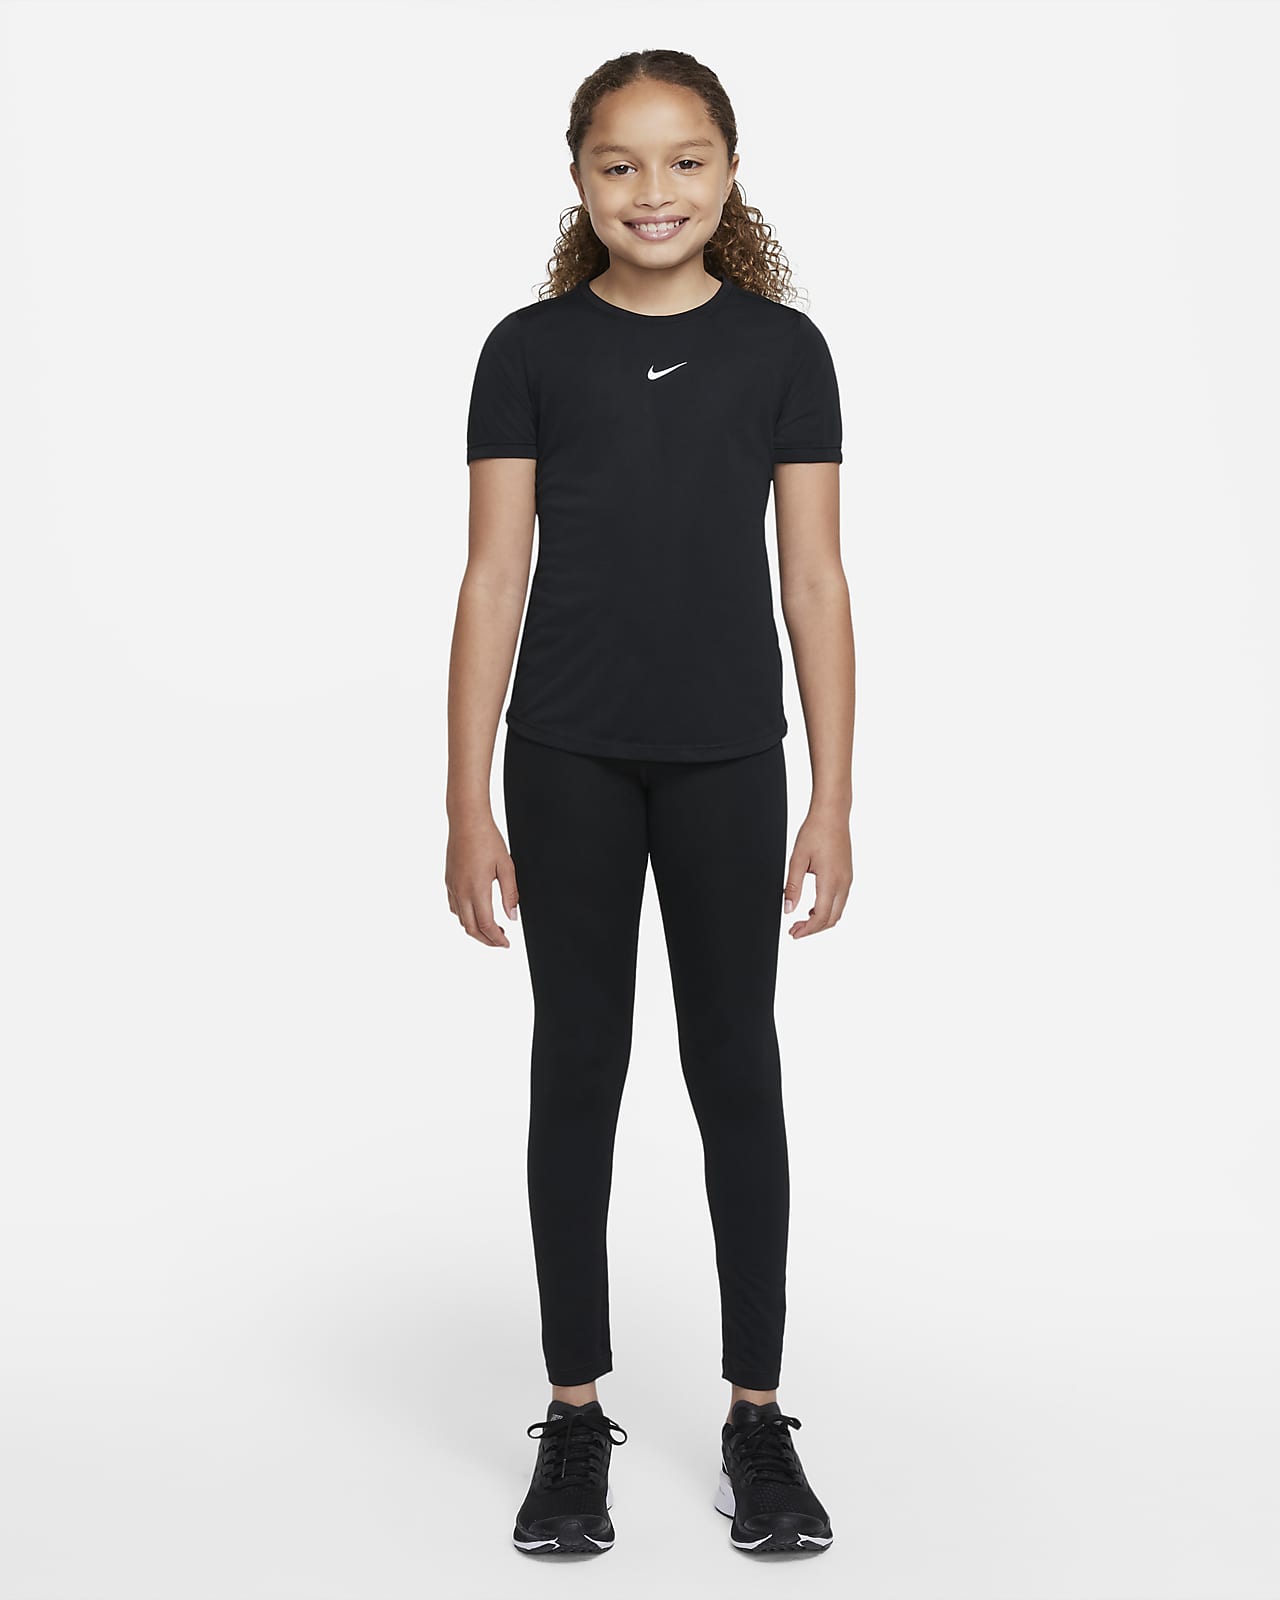 Kids\' Top. (Girls\') Nike Big Short-Sleeve One